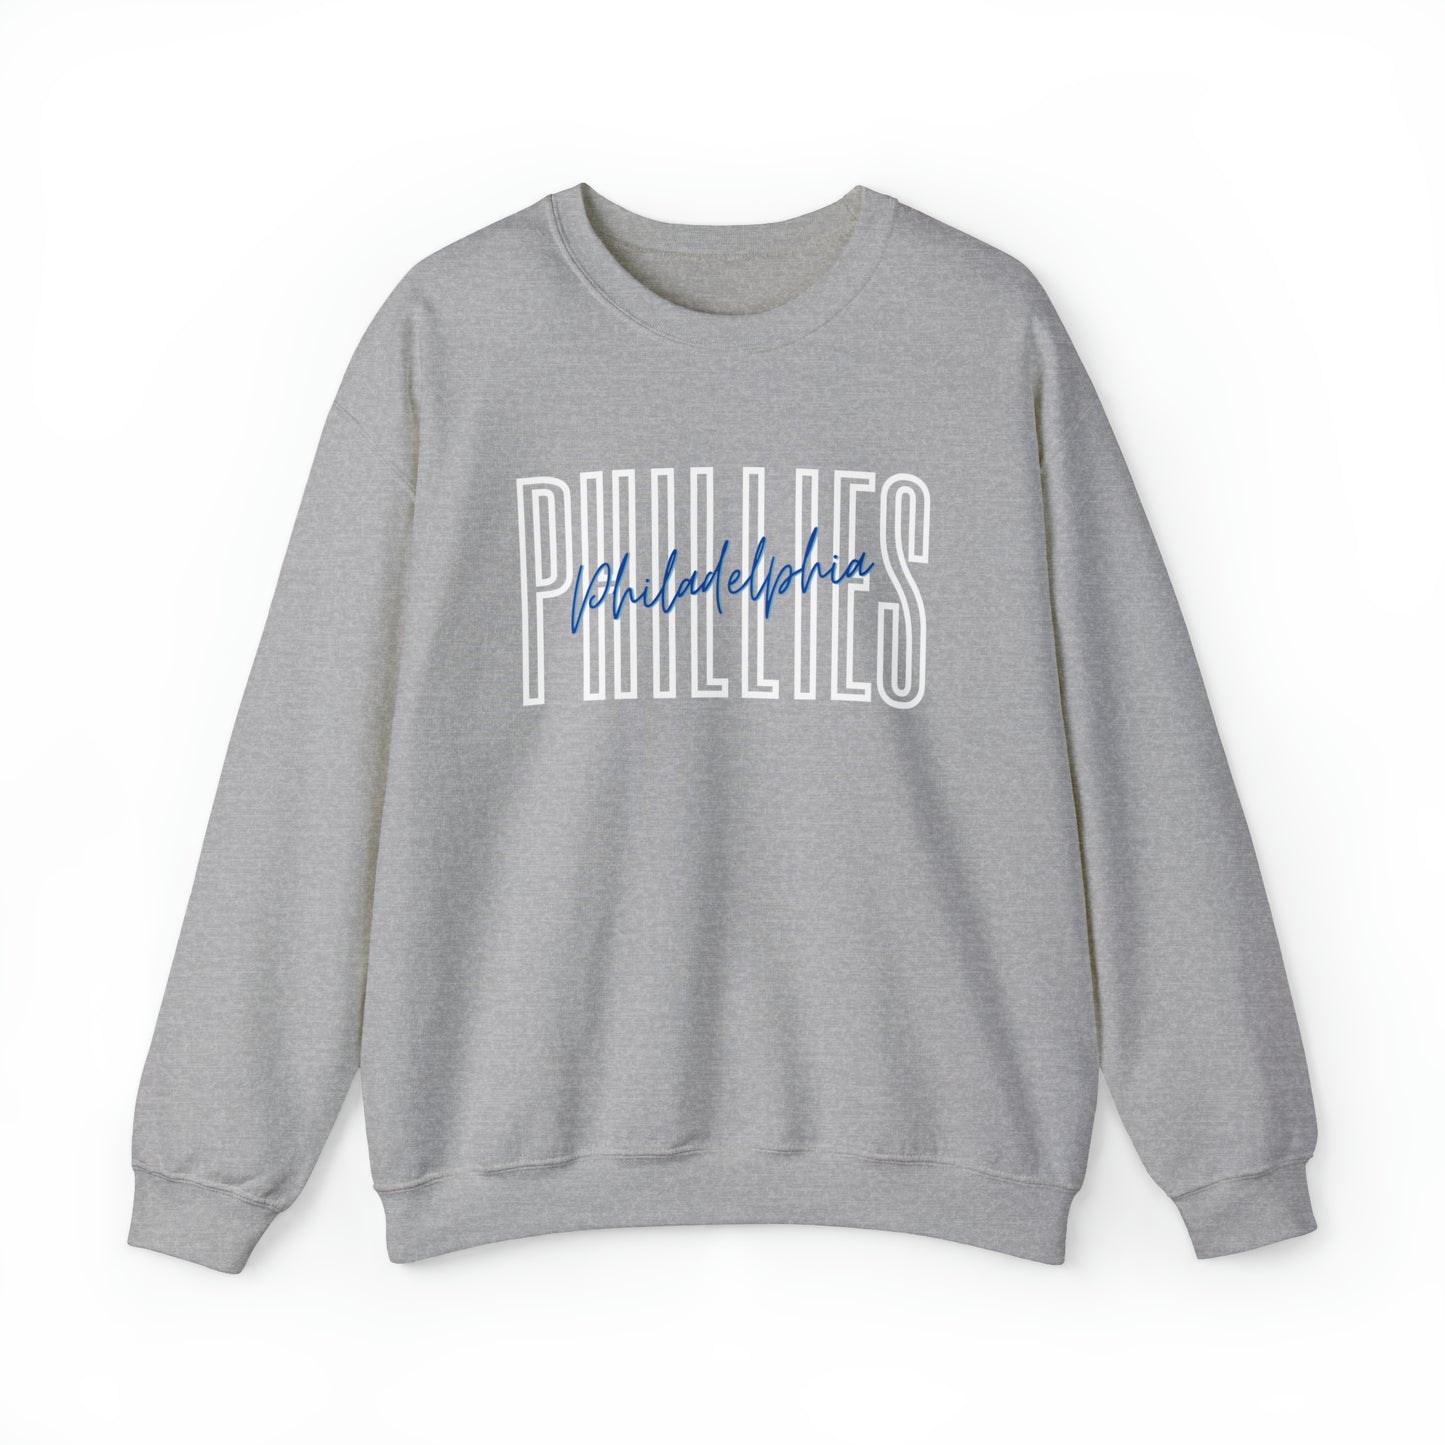 Philadelphia Phillies - Unisex Crewneck Sweatshirt